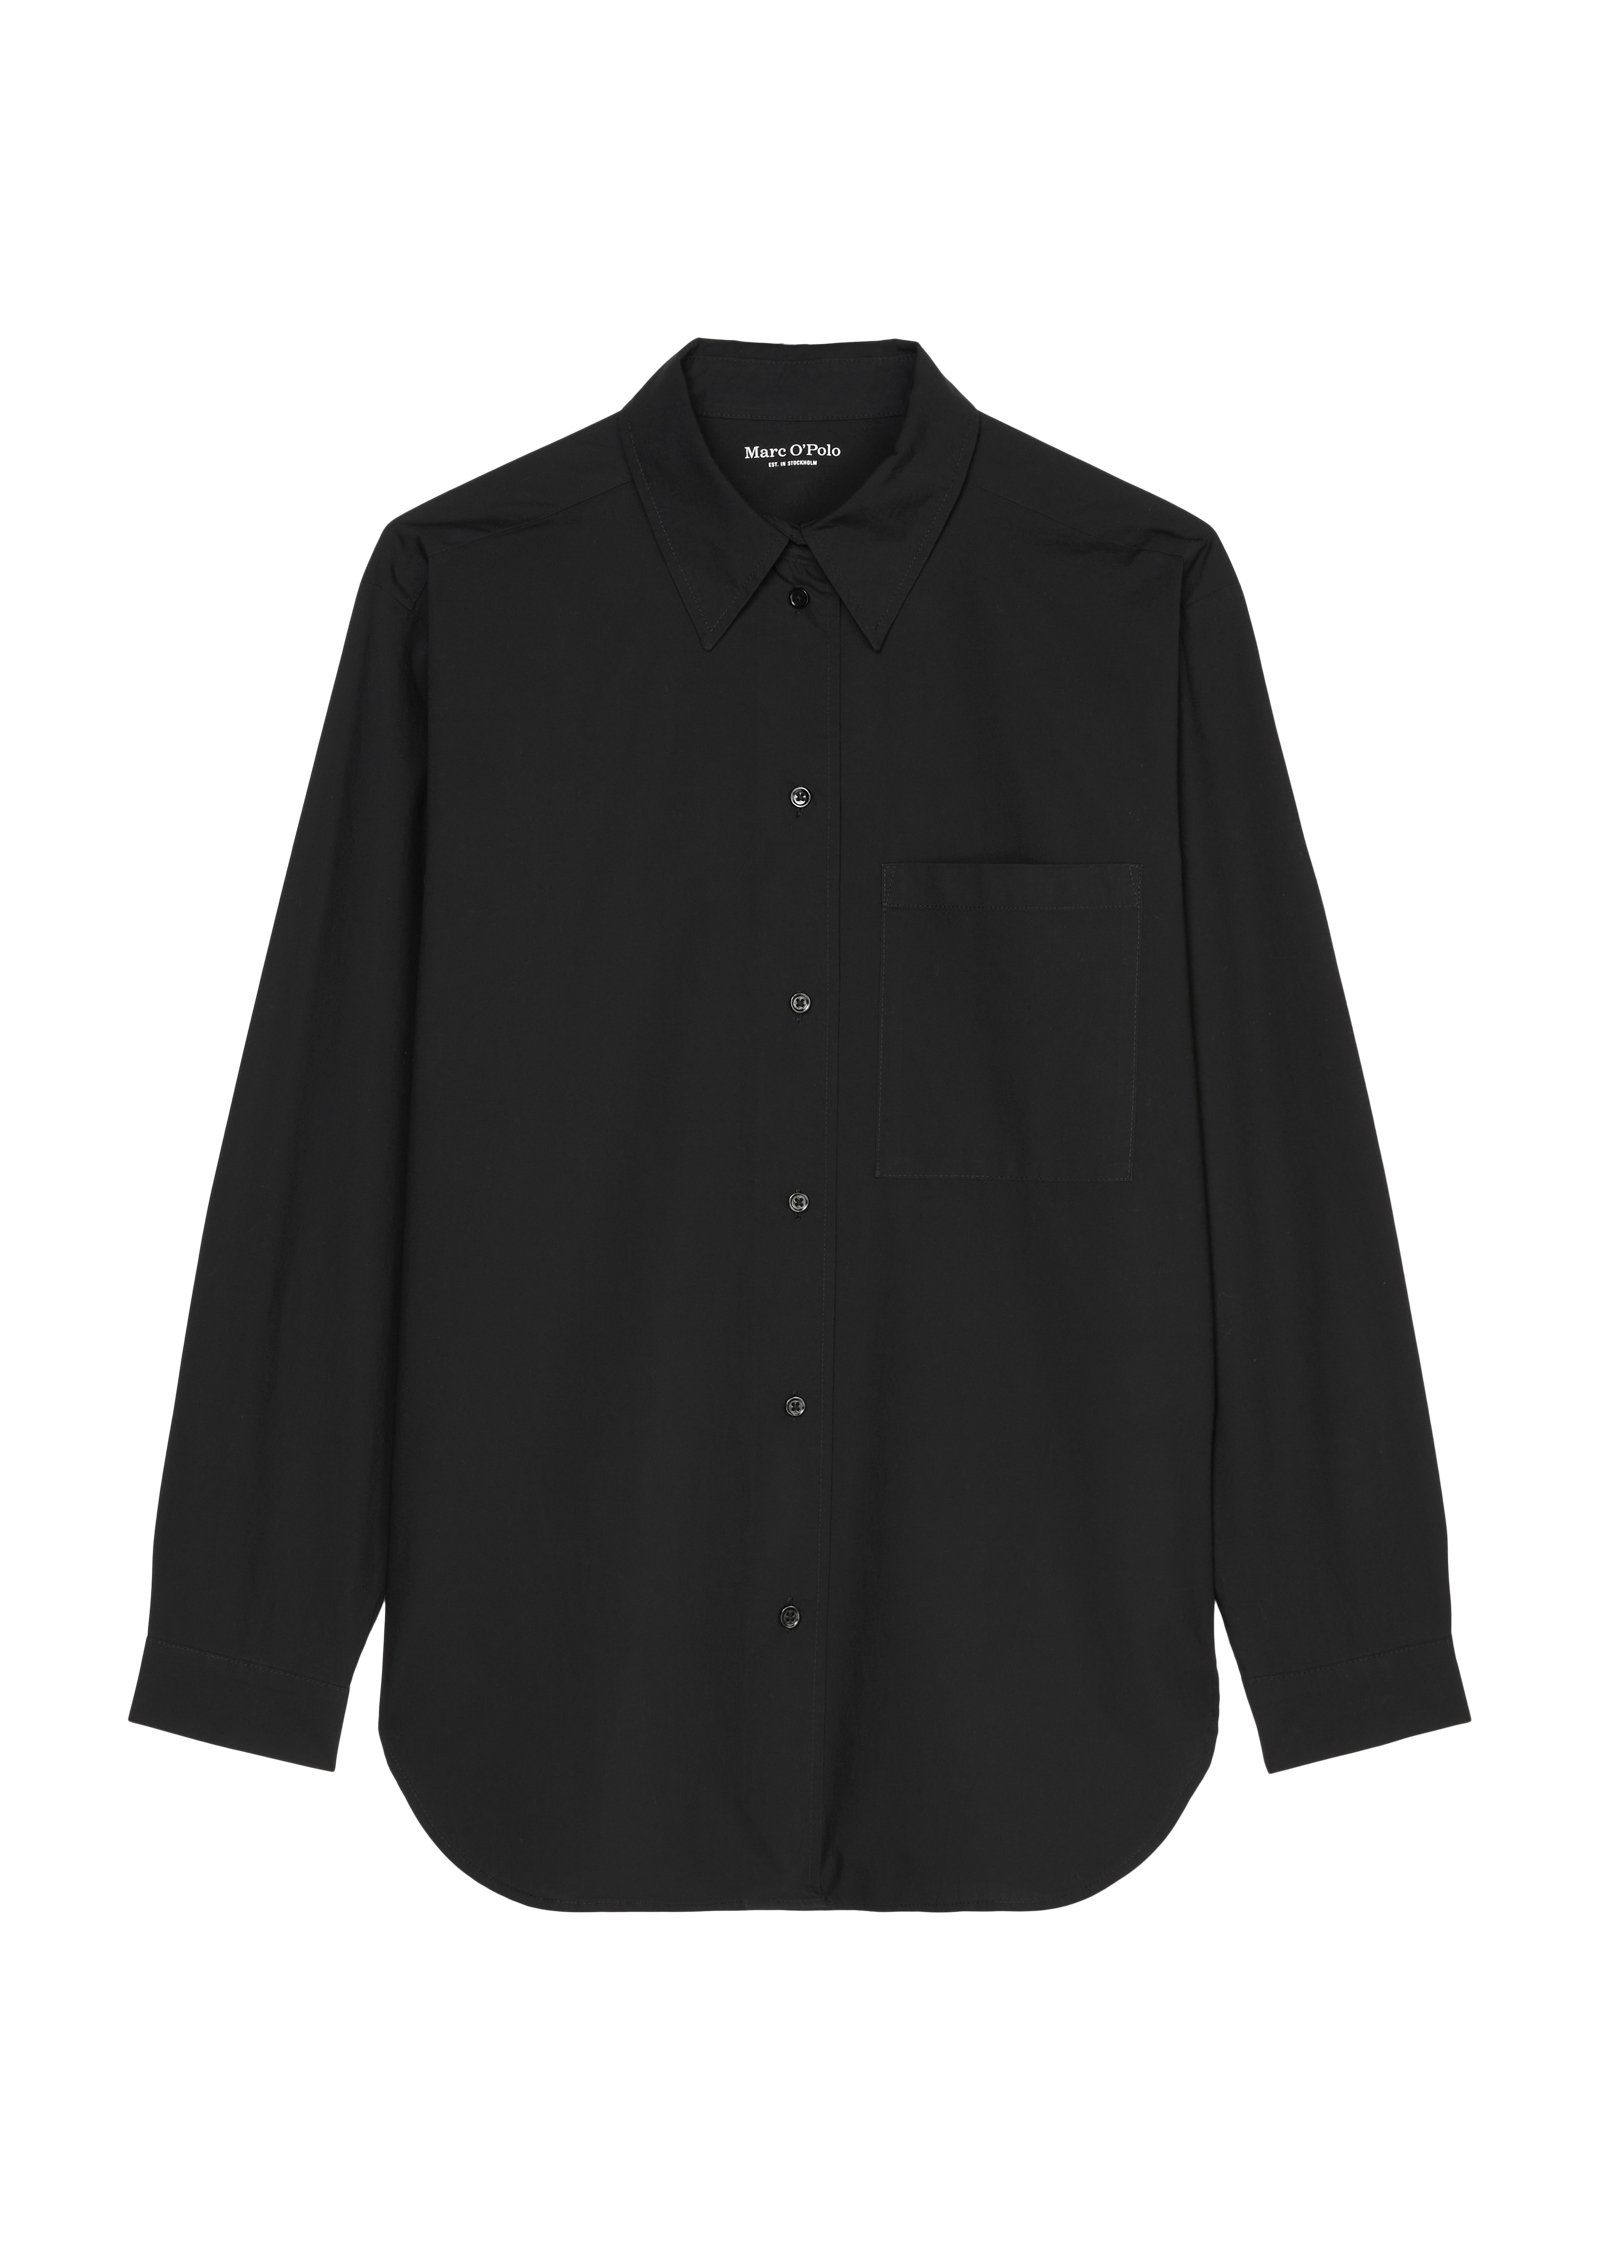 Marc O'Polo pocket, kent Hemdbluse aufgesetzten solid patched Blouse, black einer sleeve, long Brusttasche collar, mit